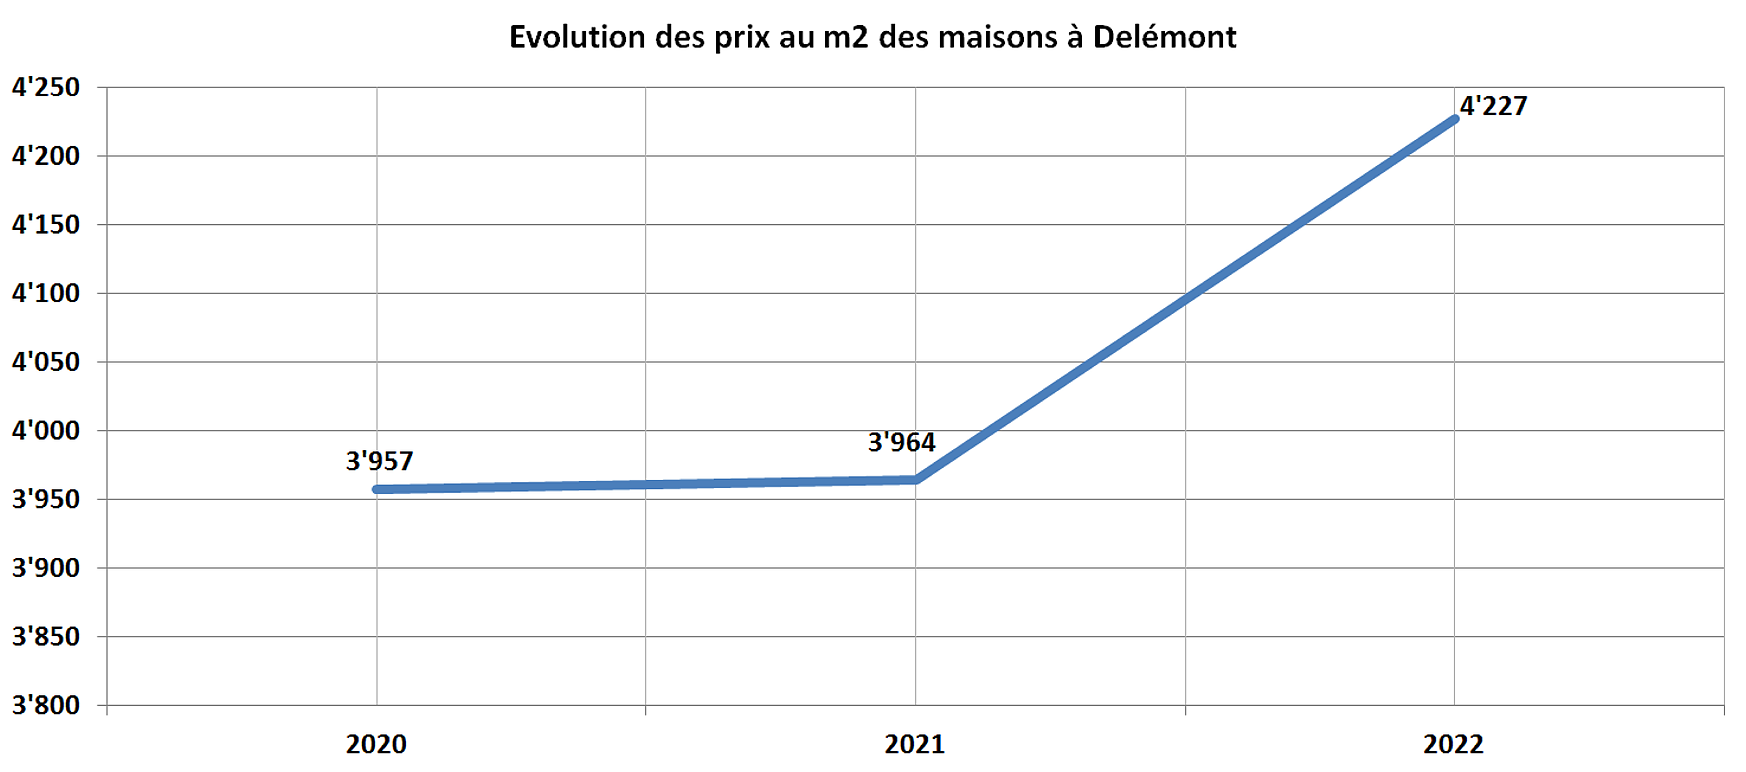 evolution prix m2 maison delemont 2022